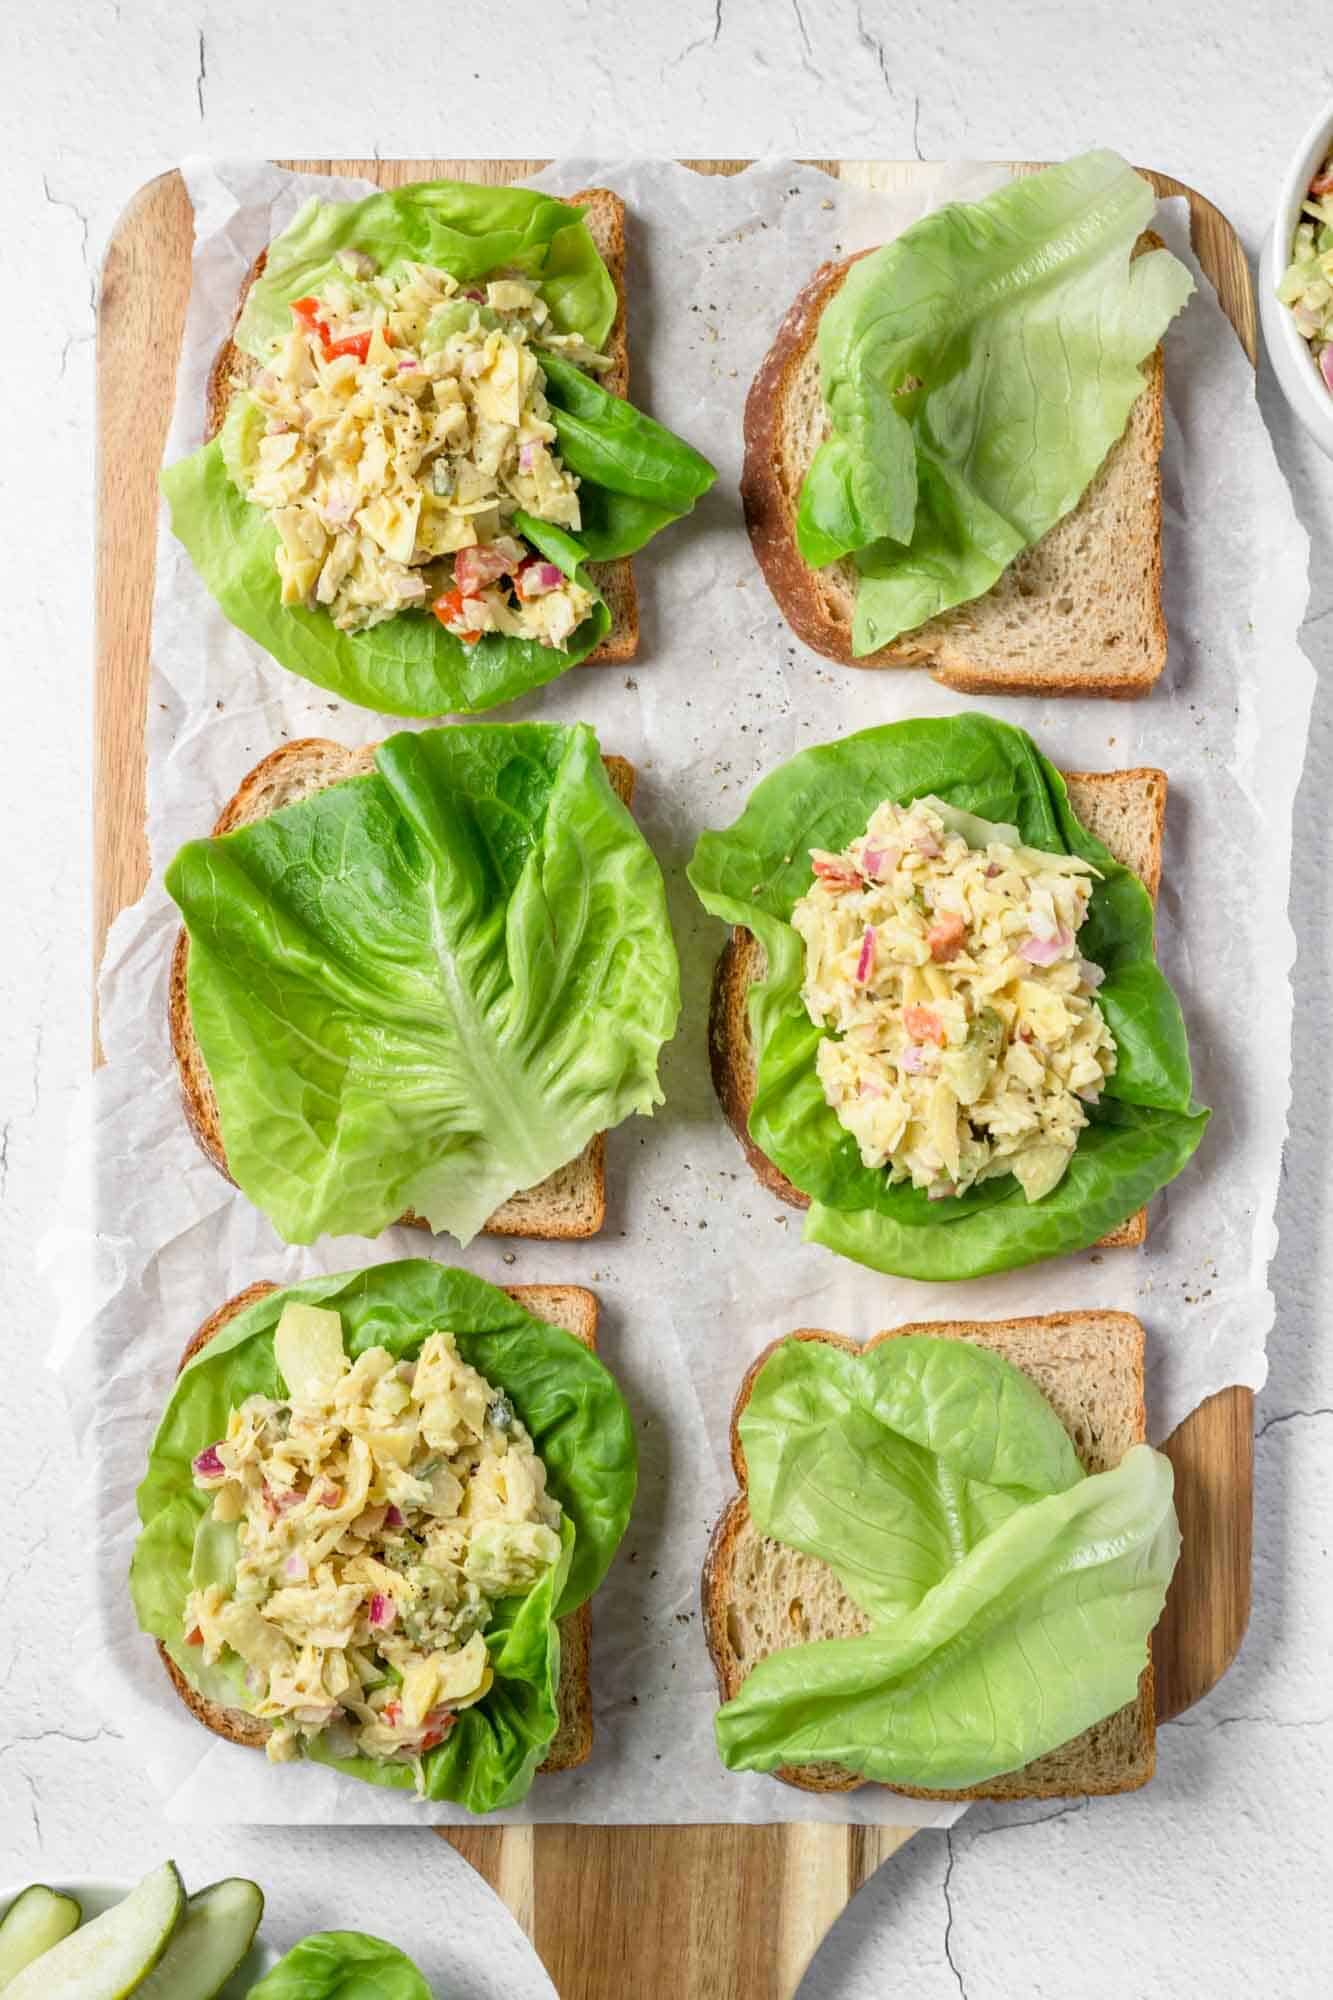 How to Make Artichoke Tuna Salad Recipe